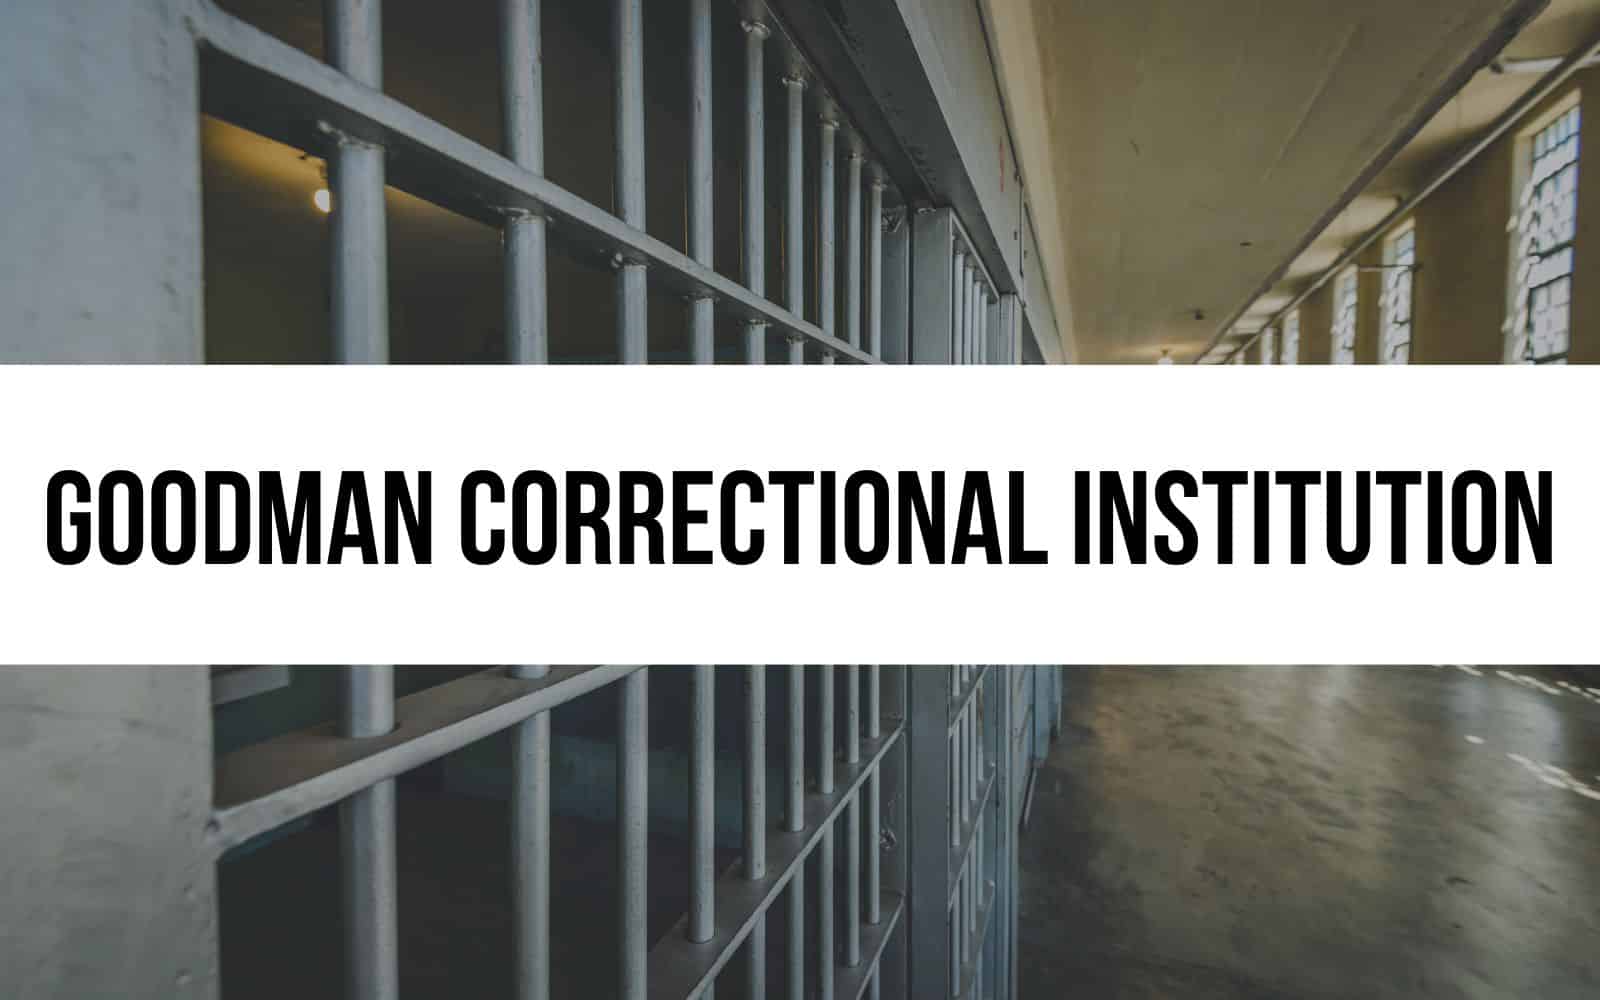 Goodman Correctional Institution